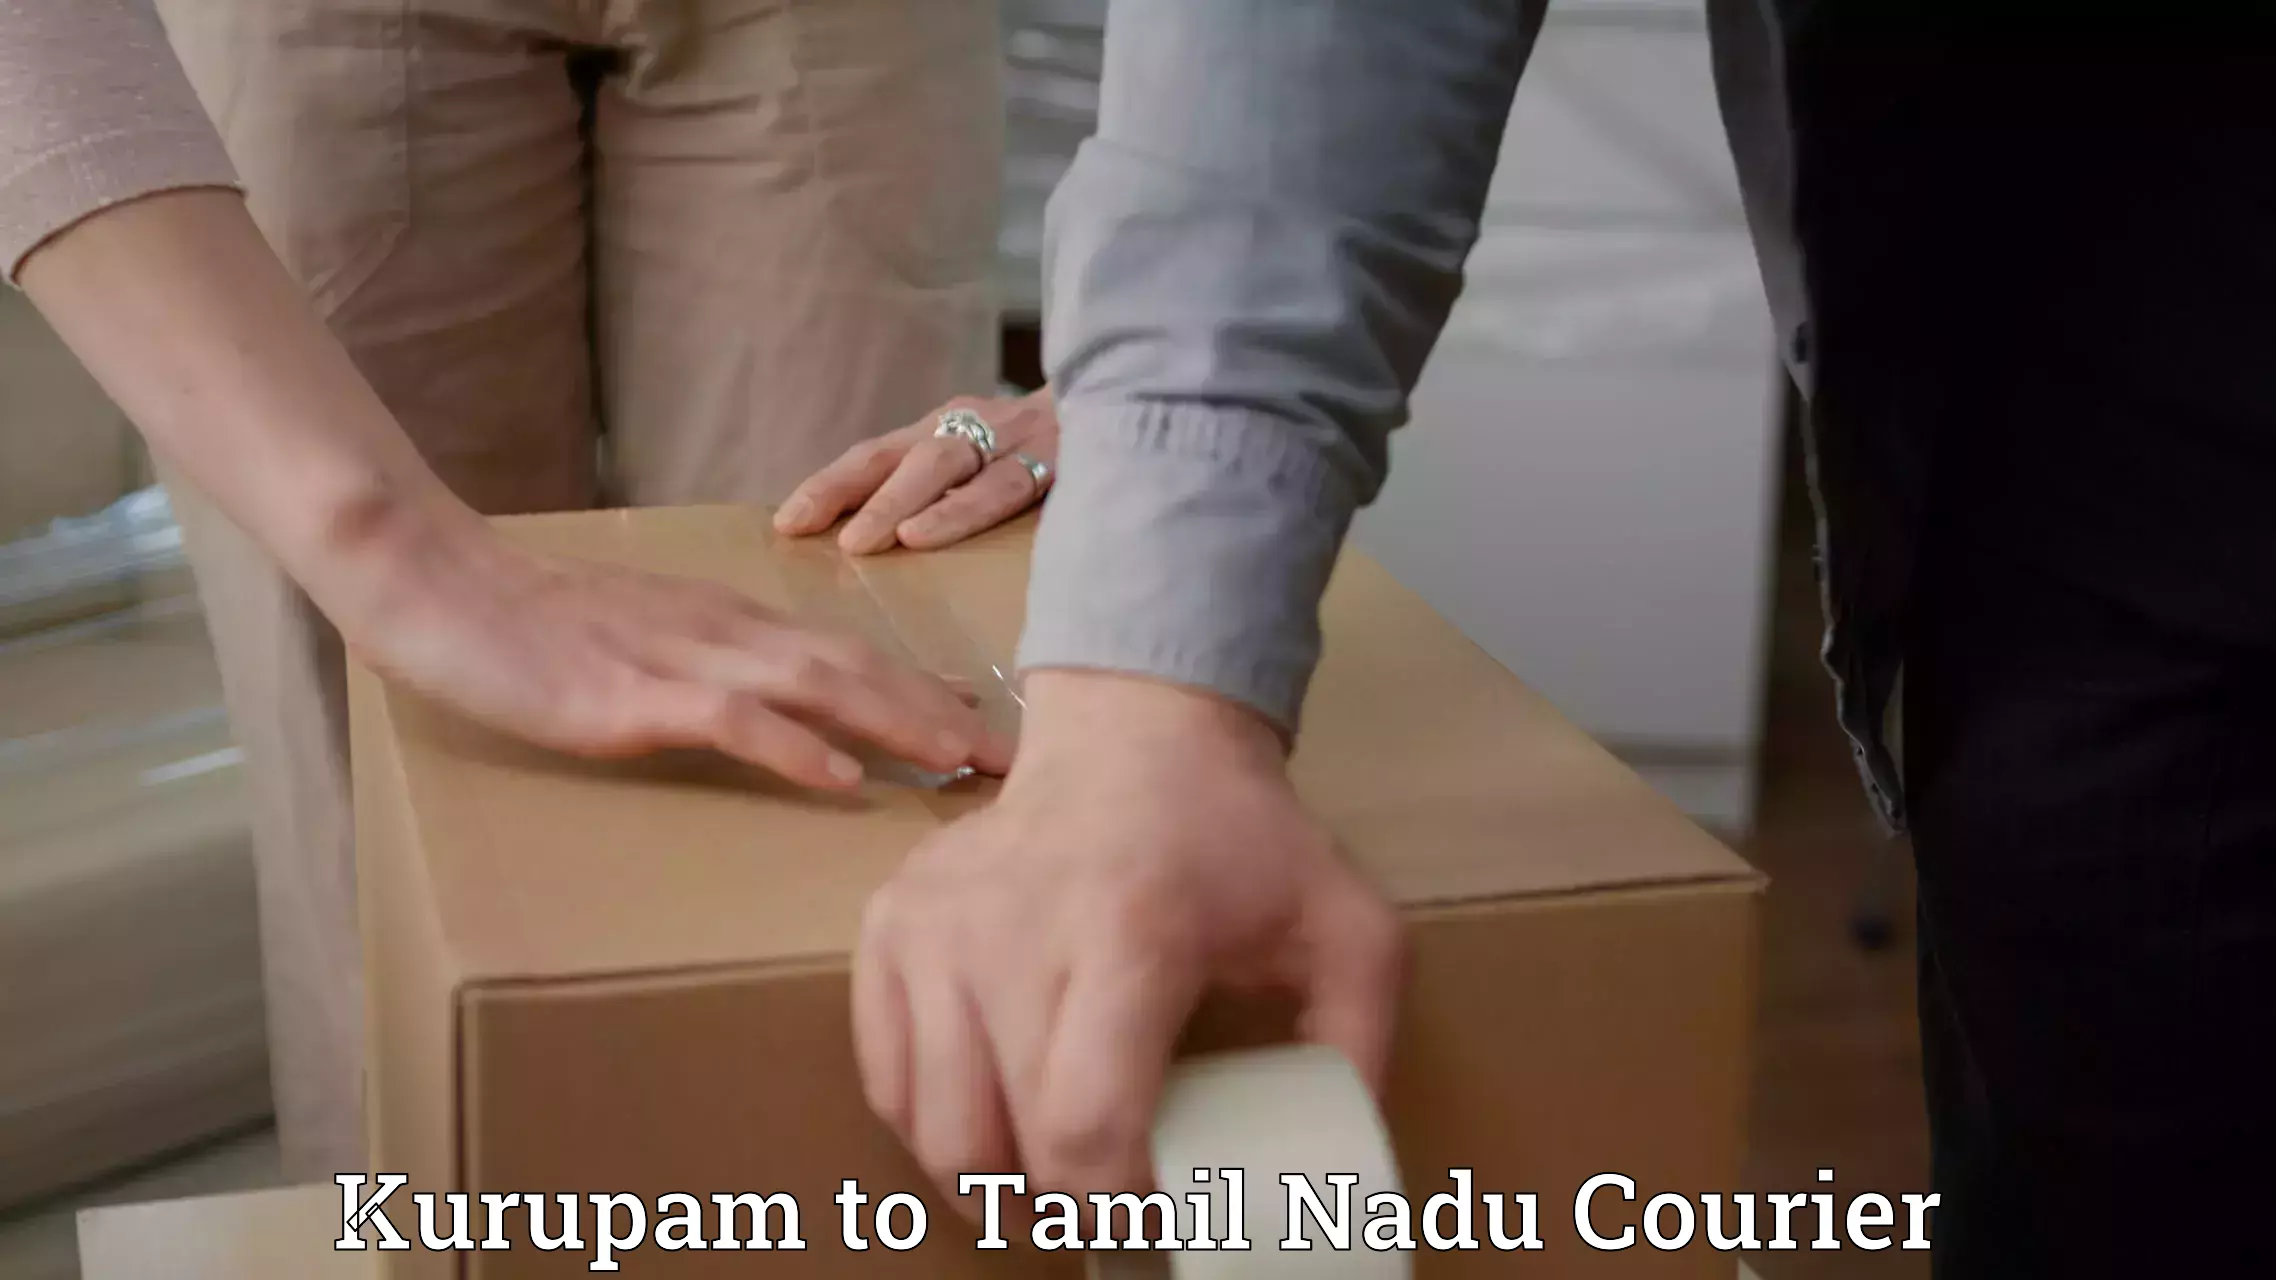 Courier service booking Kurupam to Chennai Port